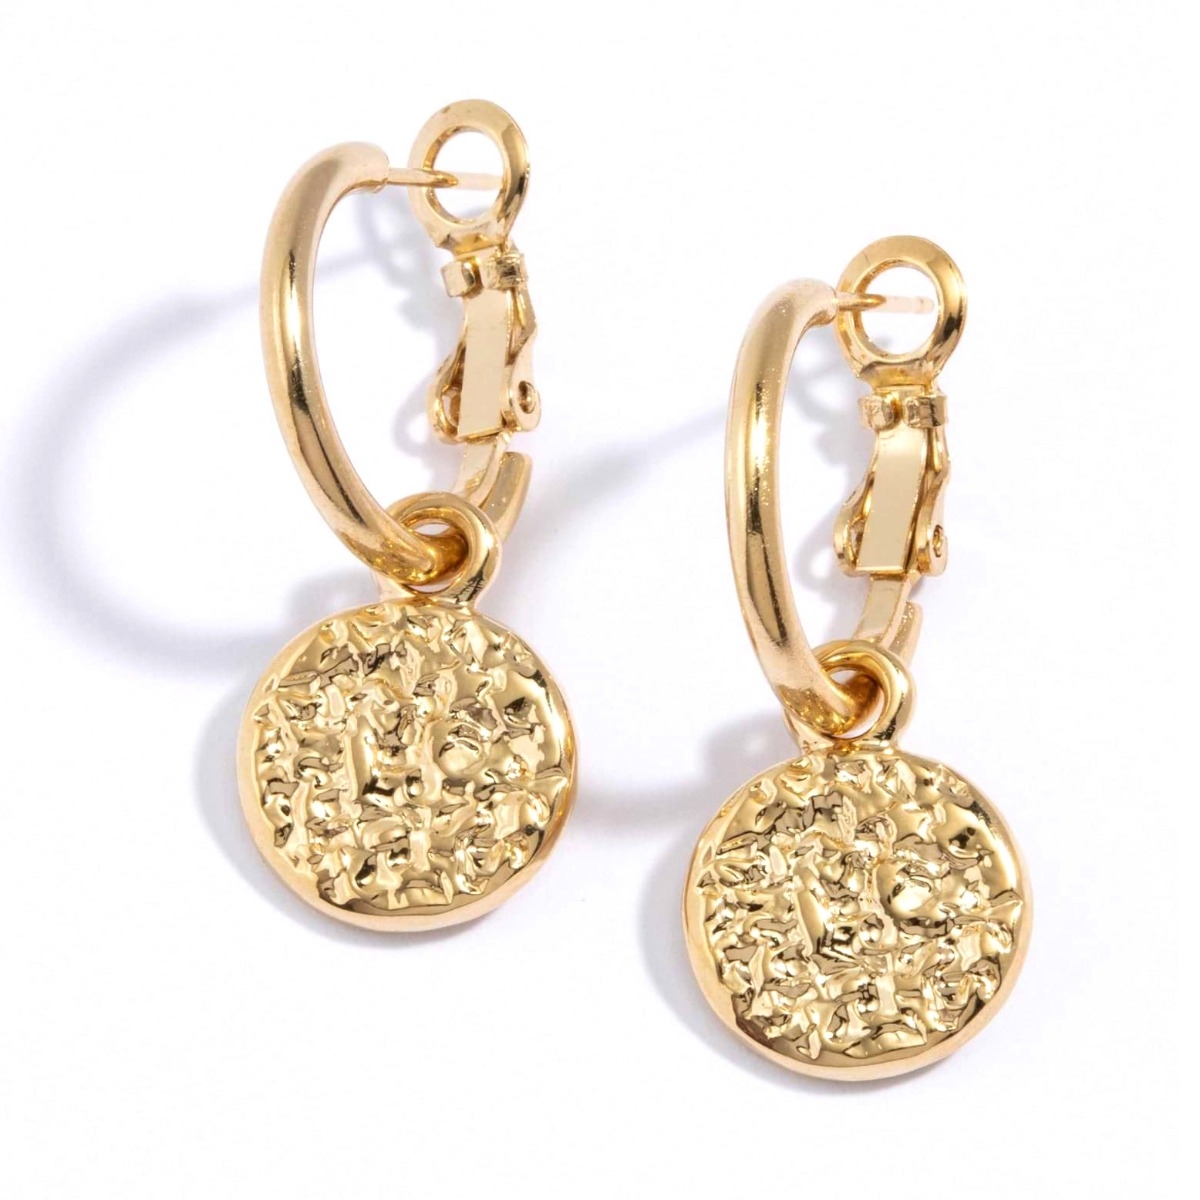 Danon 24K Gold-Plated Kon Earrings, Jewish Jewelry | Judaica Web Store